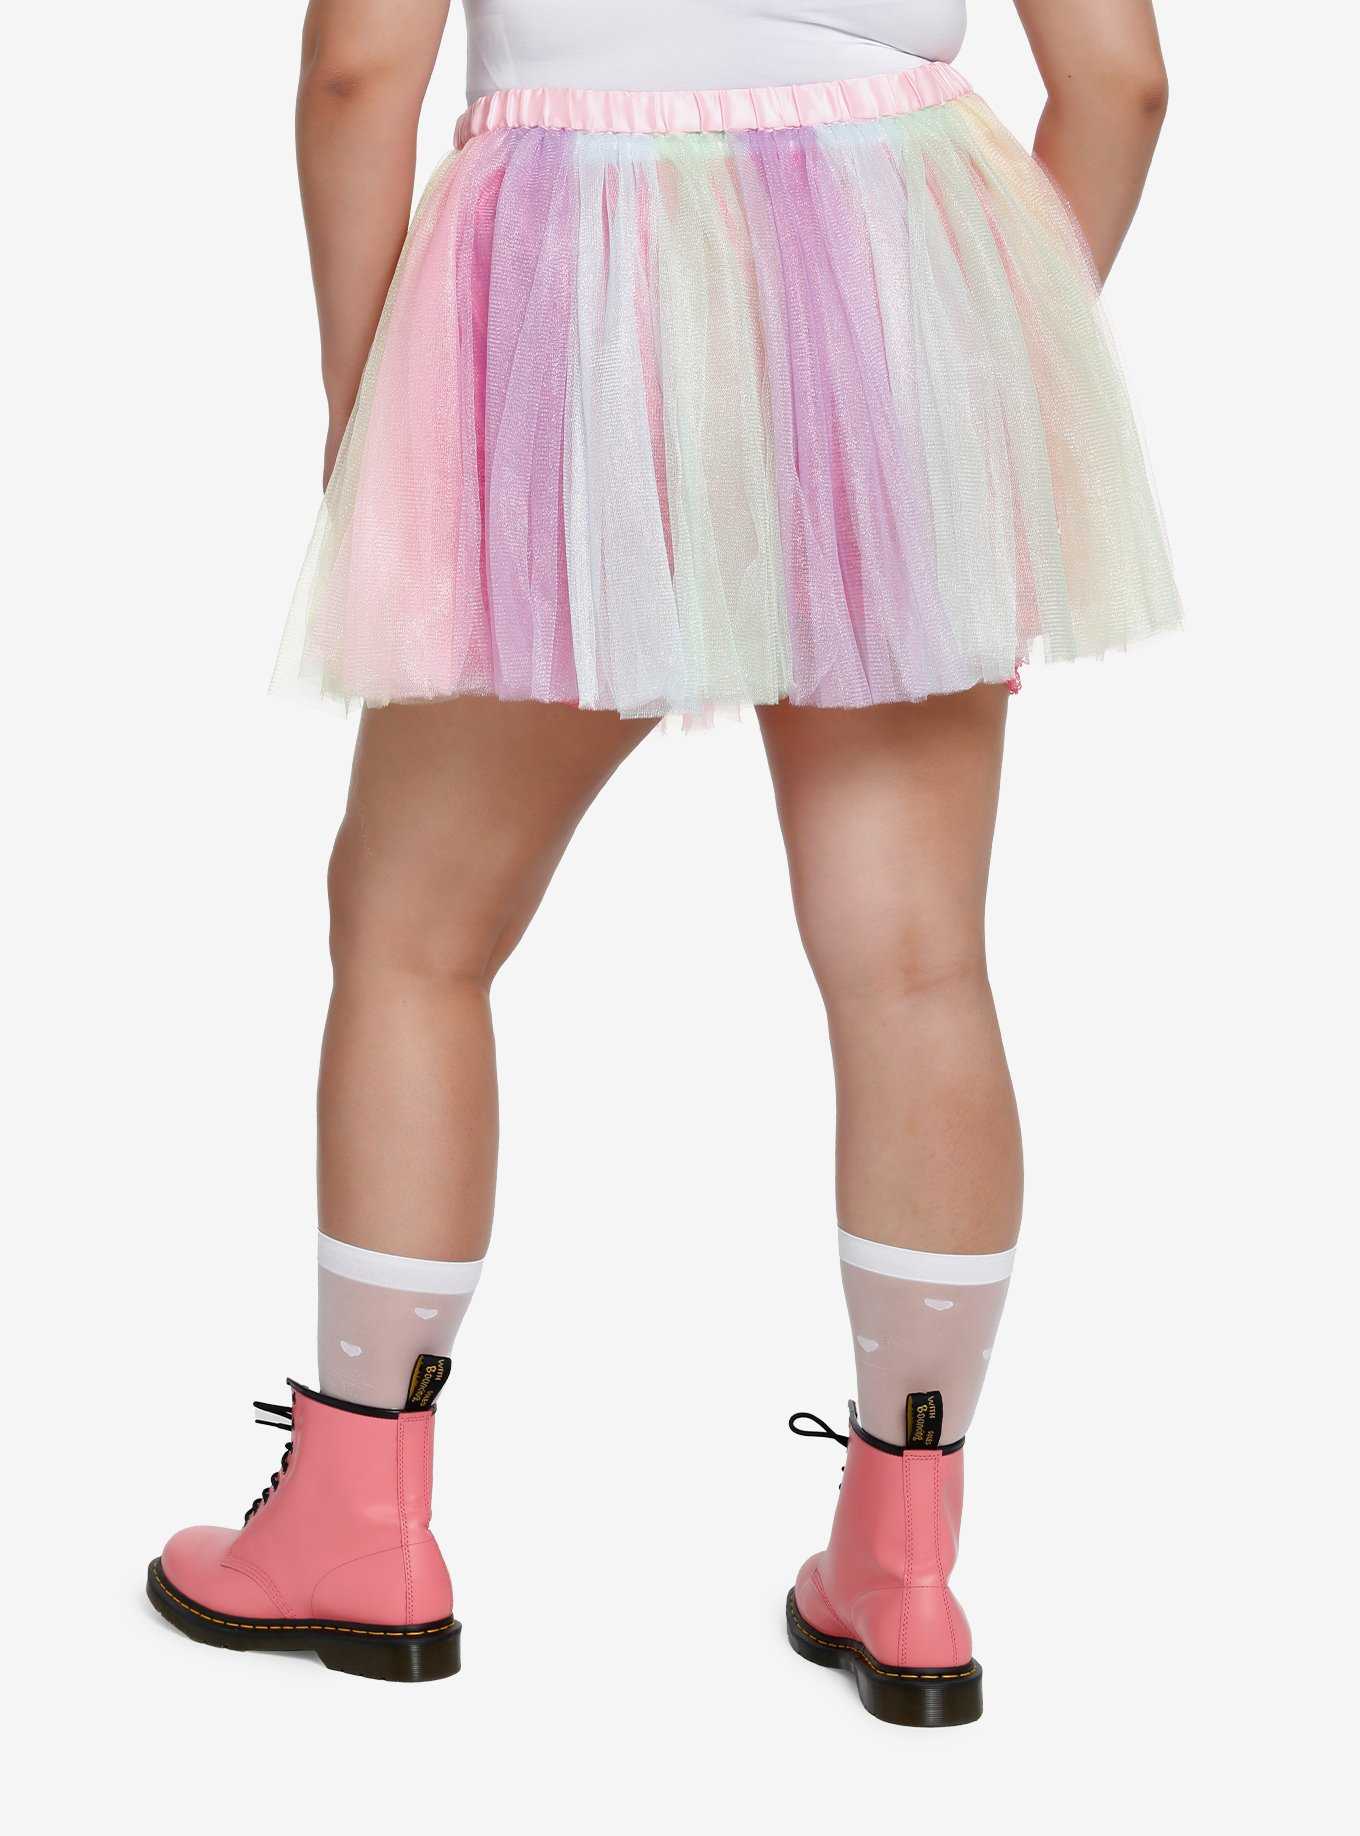 Sweet Society Rainbow Tulle Tutu Skirt Plus Size, , hi-res